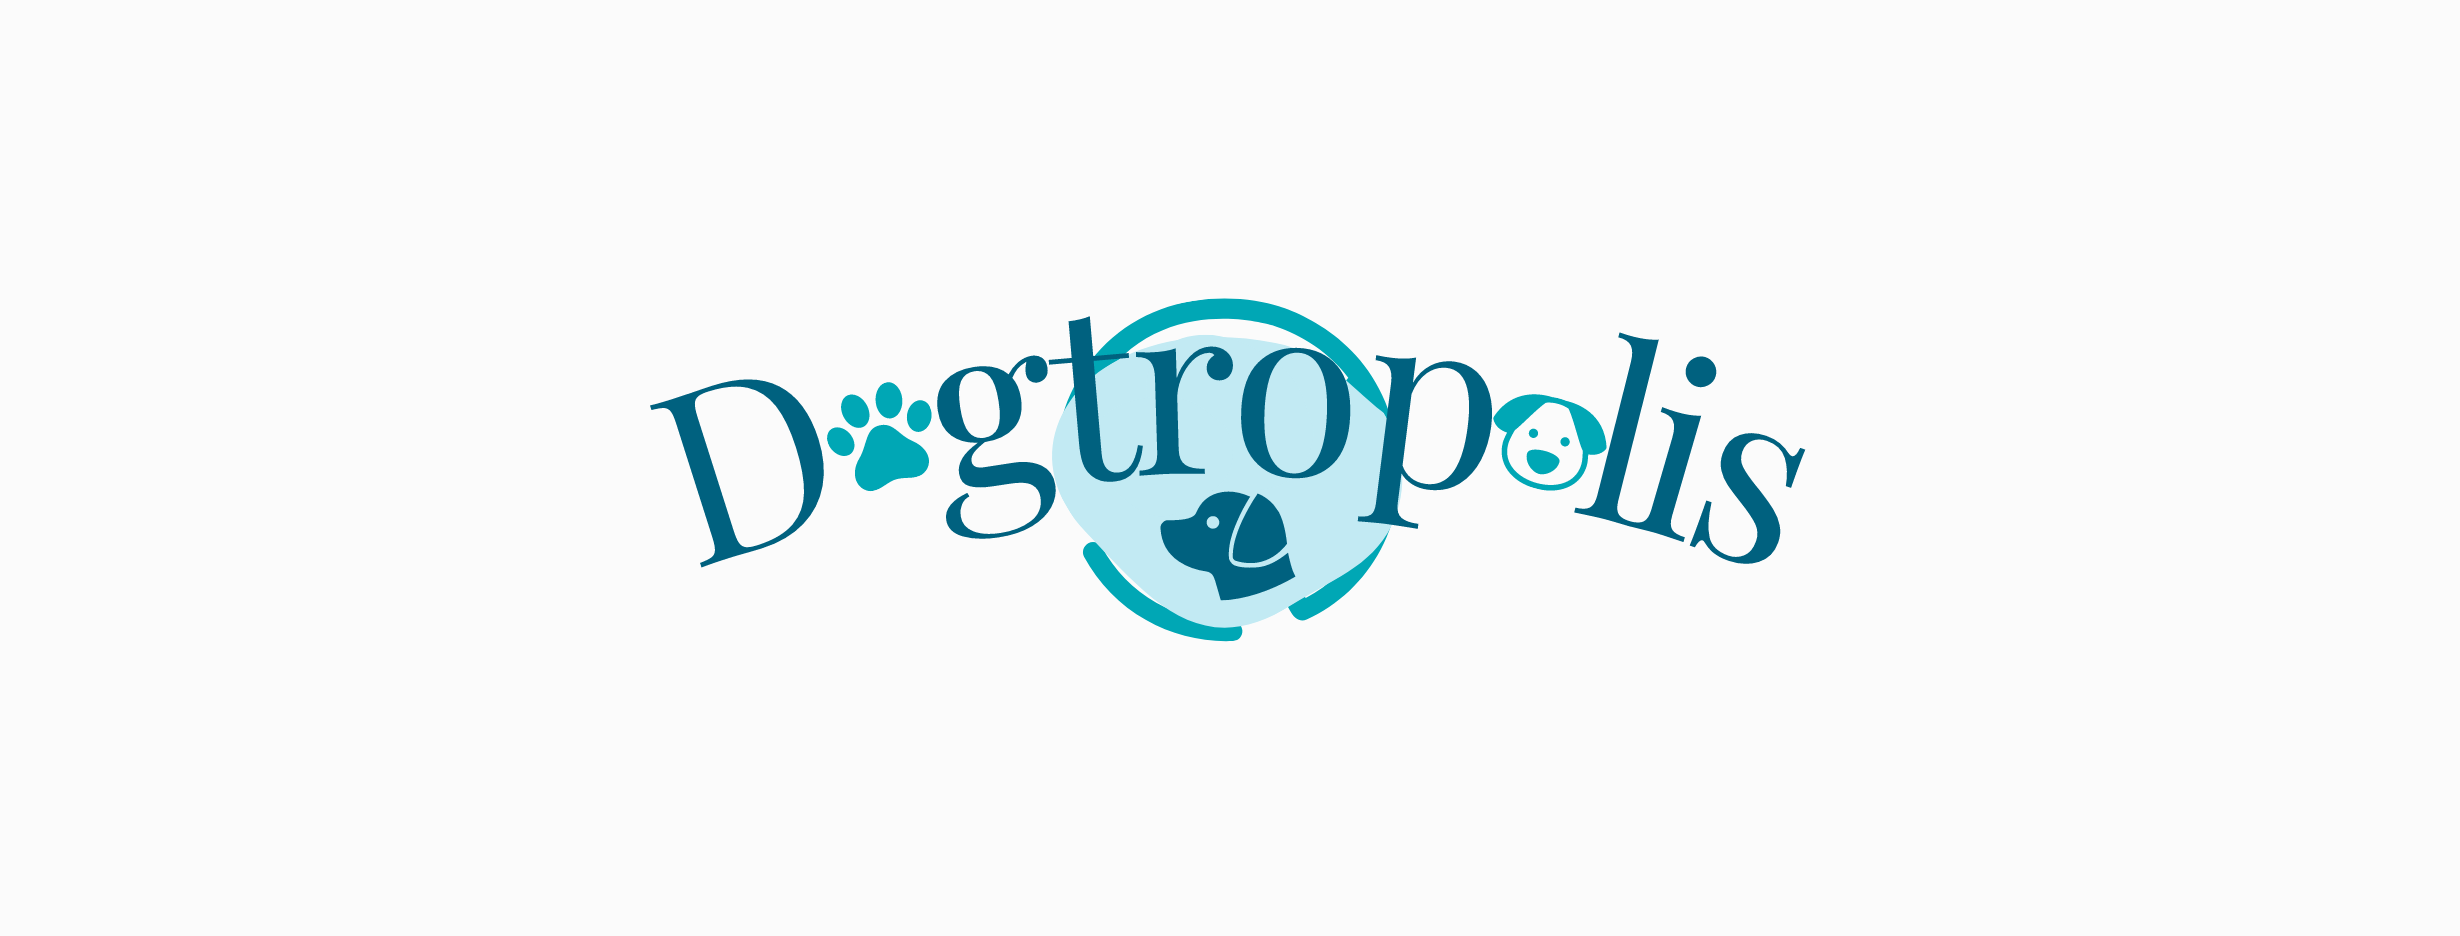 Welcome to Dogtropolis!!